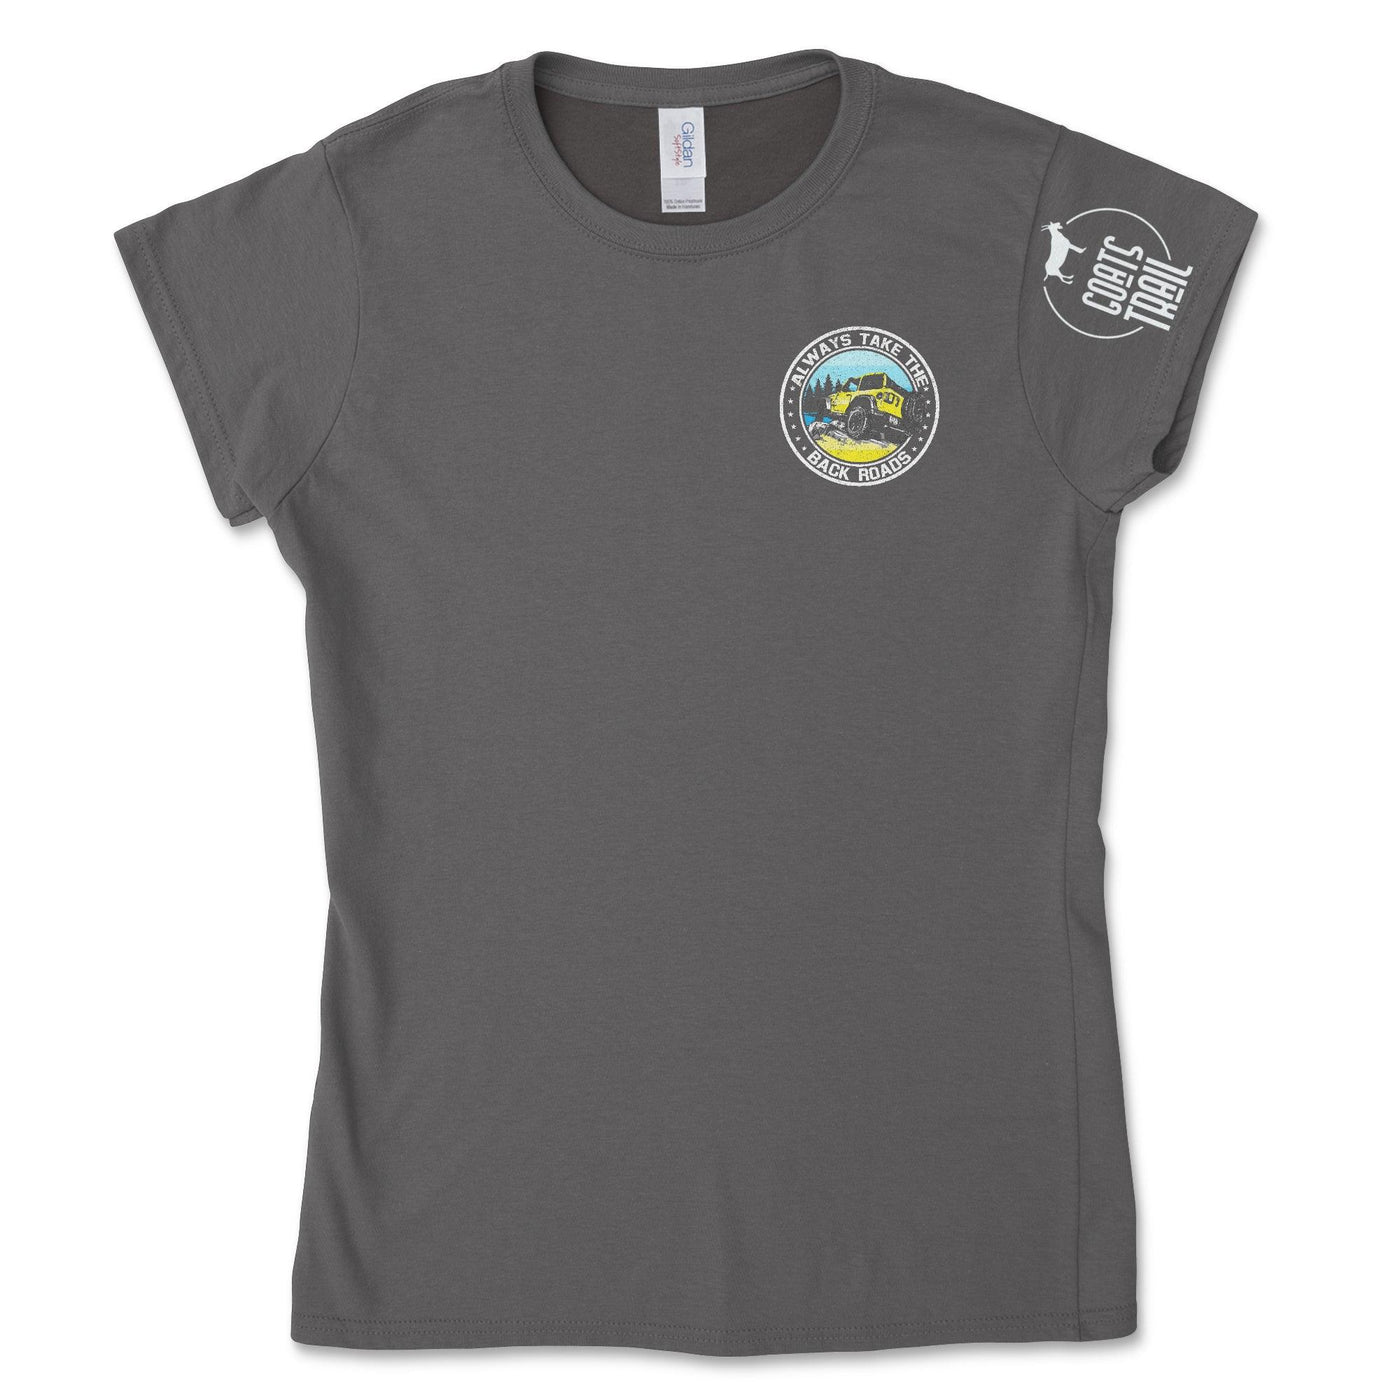 Women's Jeep Slim Fit T-shirt - Goats Trail